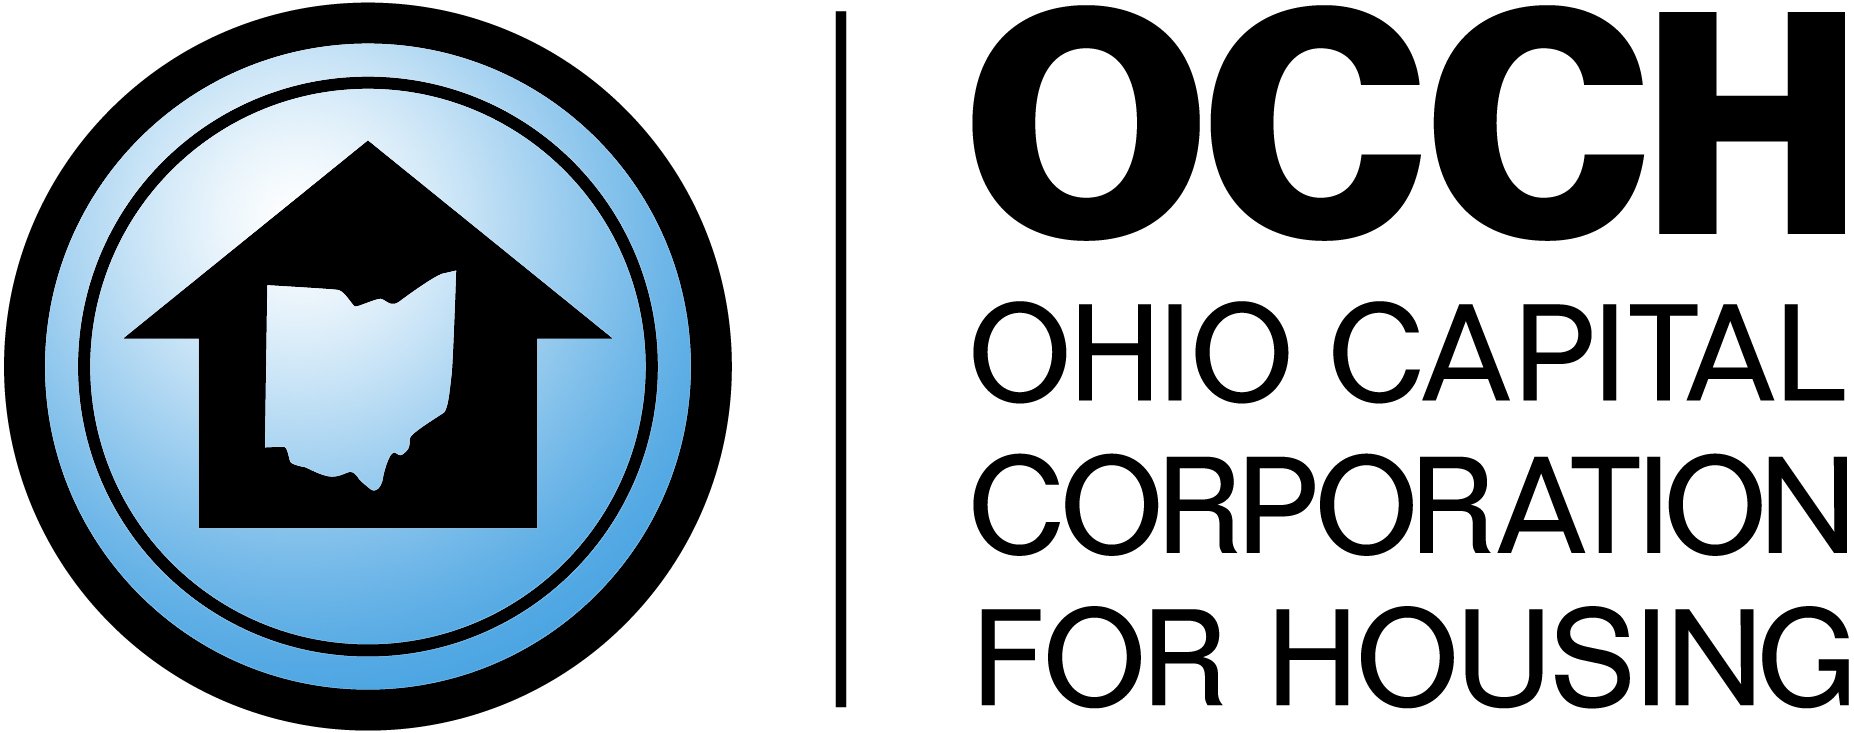 OCCH_logo.jpg